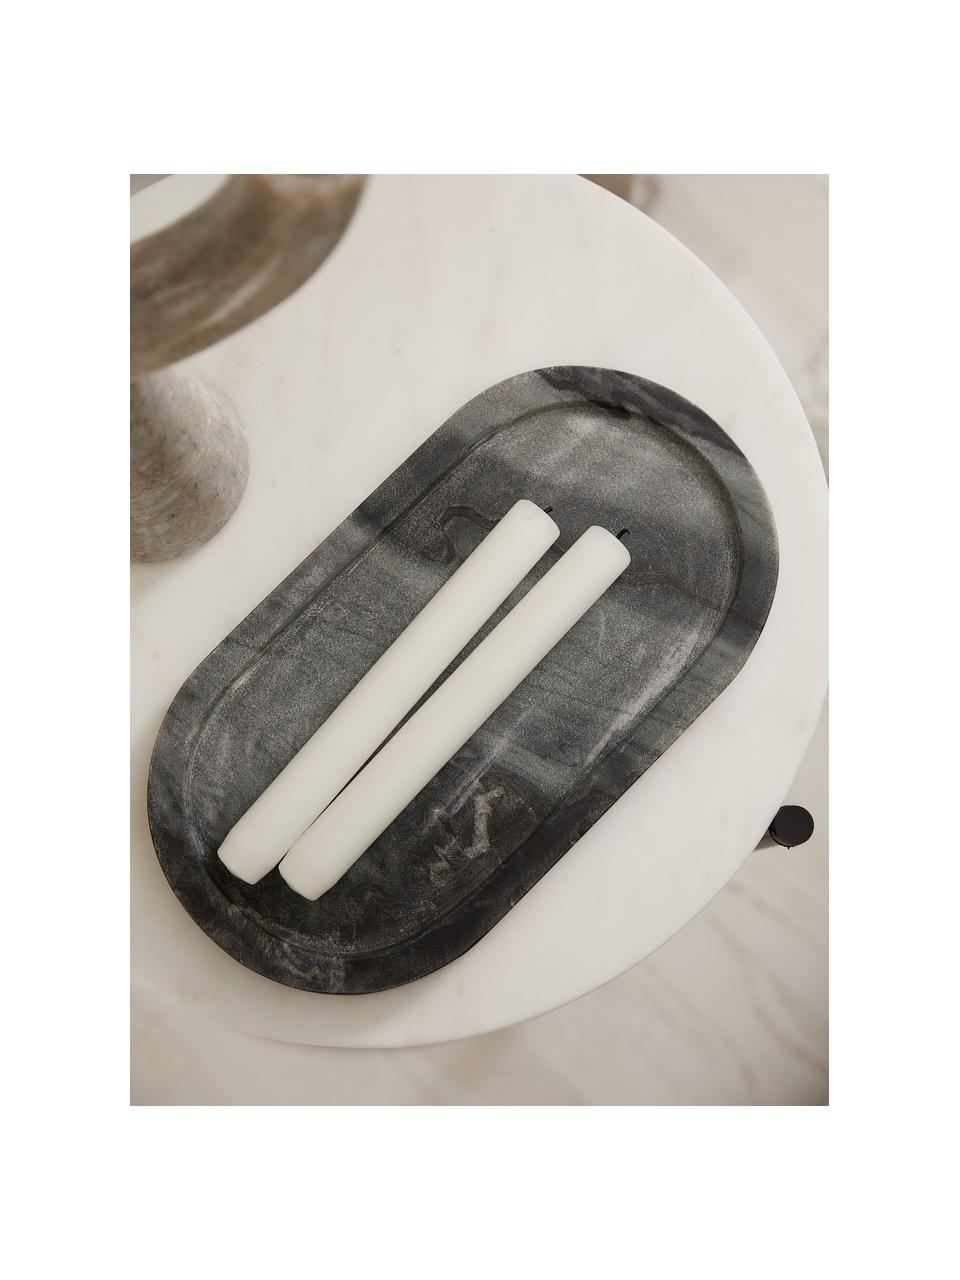 Deko-Tablett Oval aus Marmor in Schwarz-Grau, Marmor, Schwarz, Grau, B 28 x T 15 cm